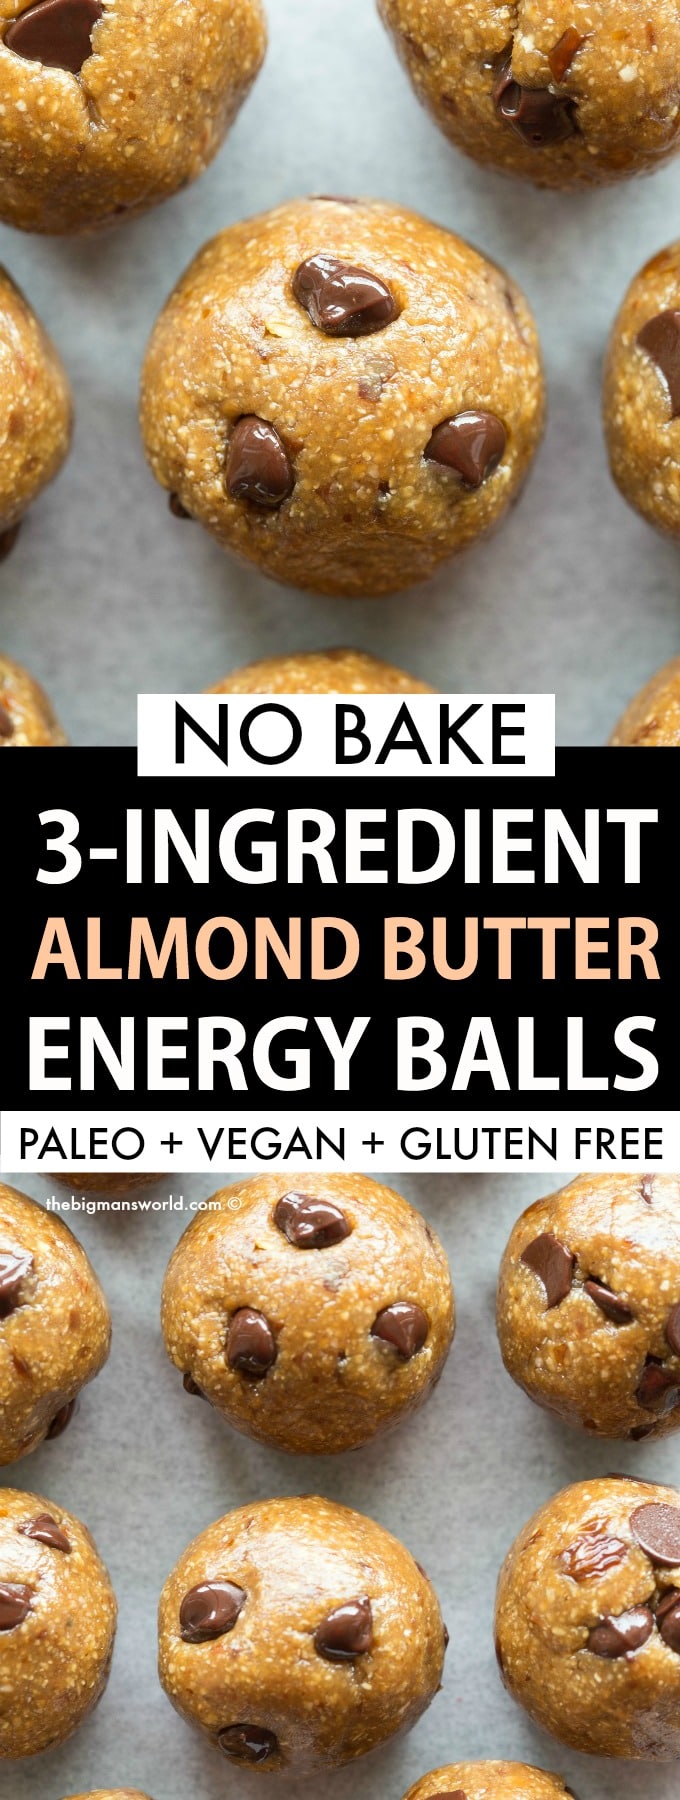 No Bake Almond Butter Energy Balls recipe that is paleo, vegan, gluten free